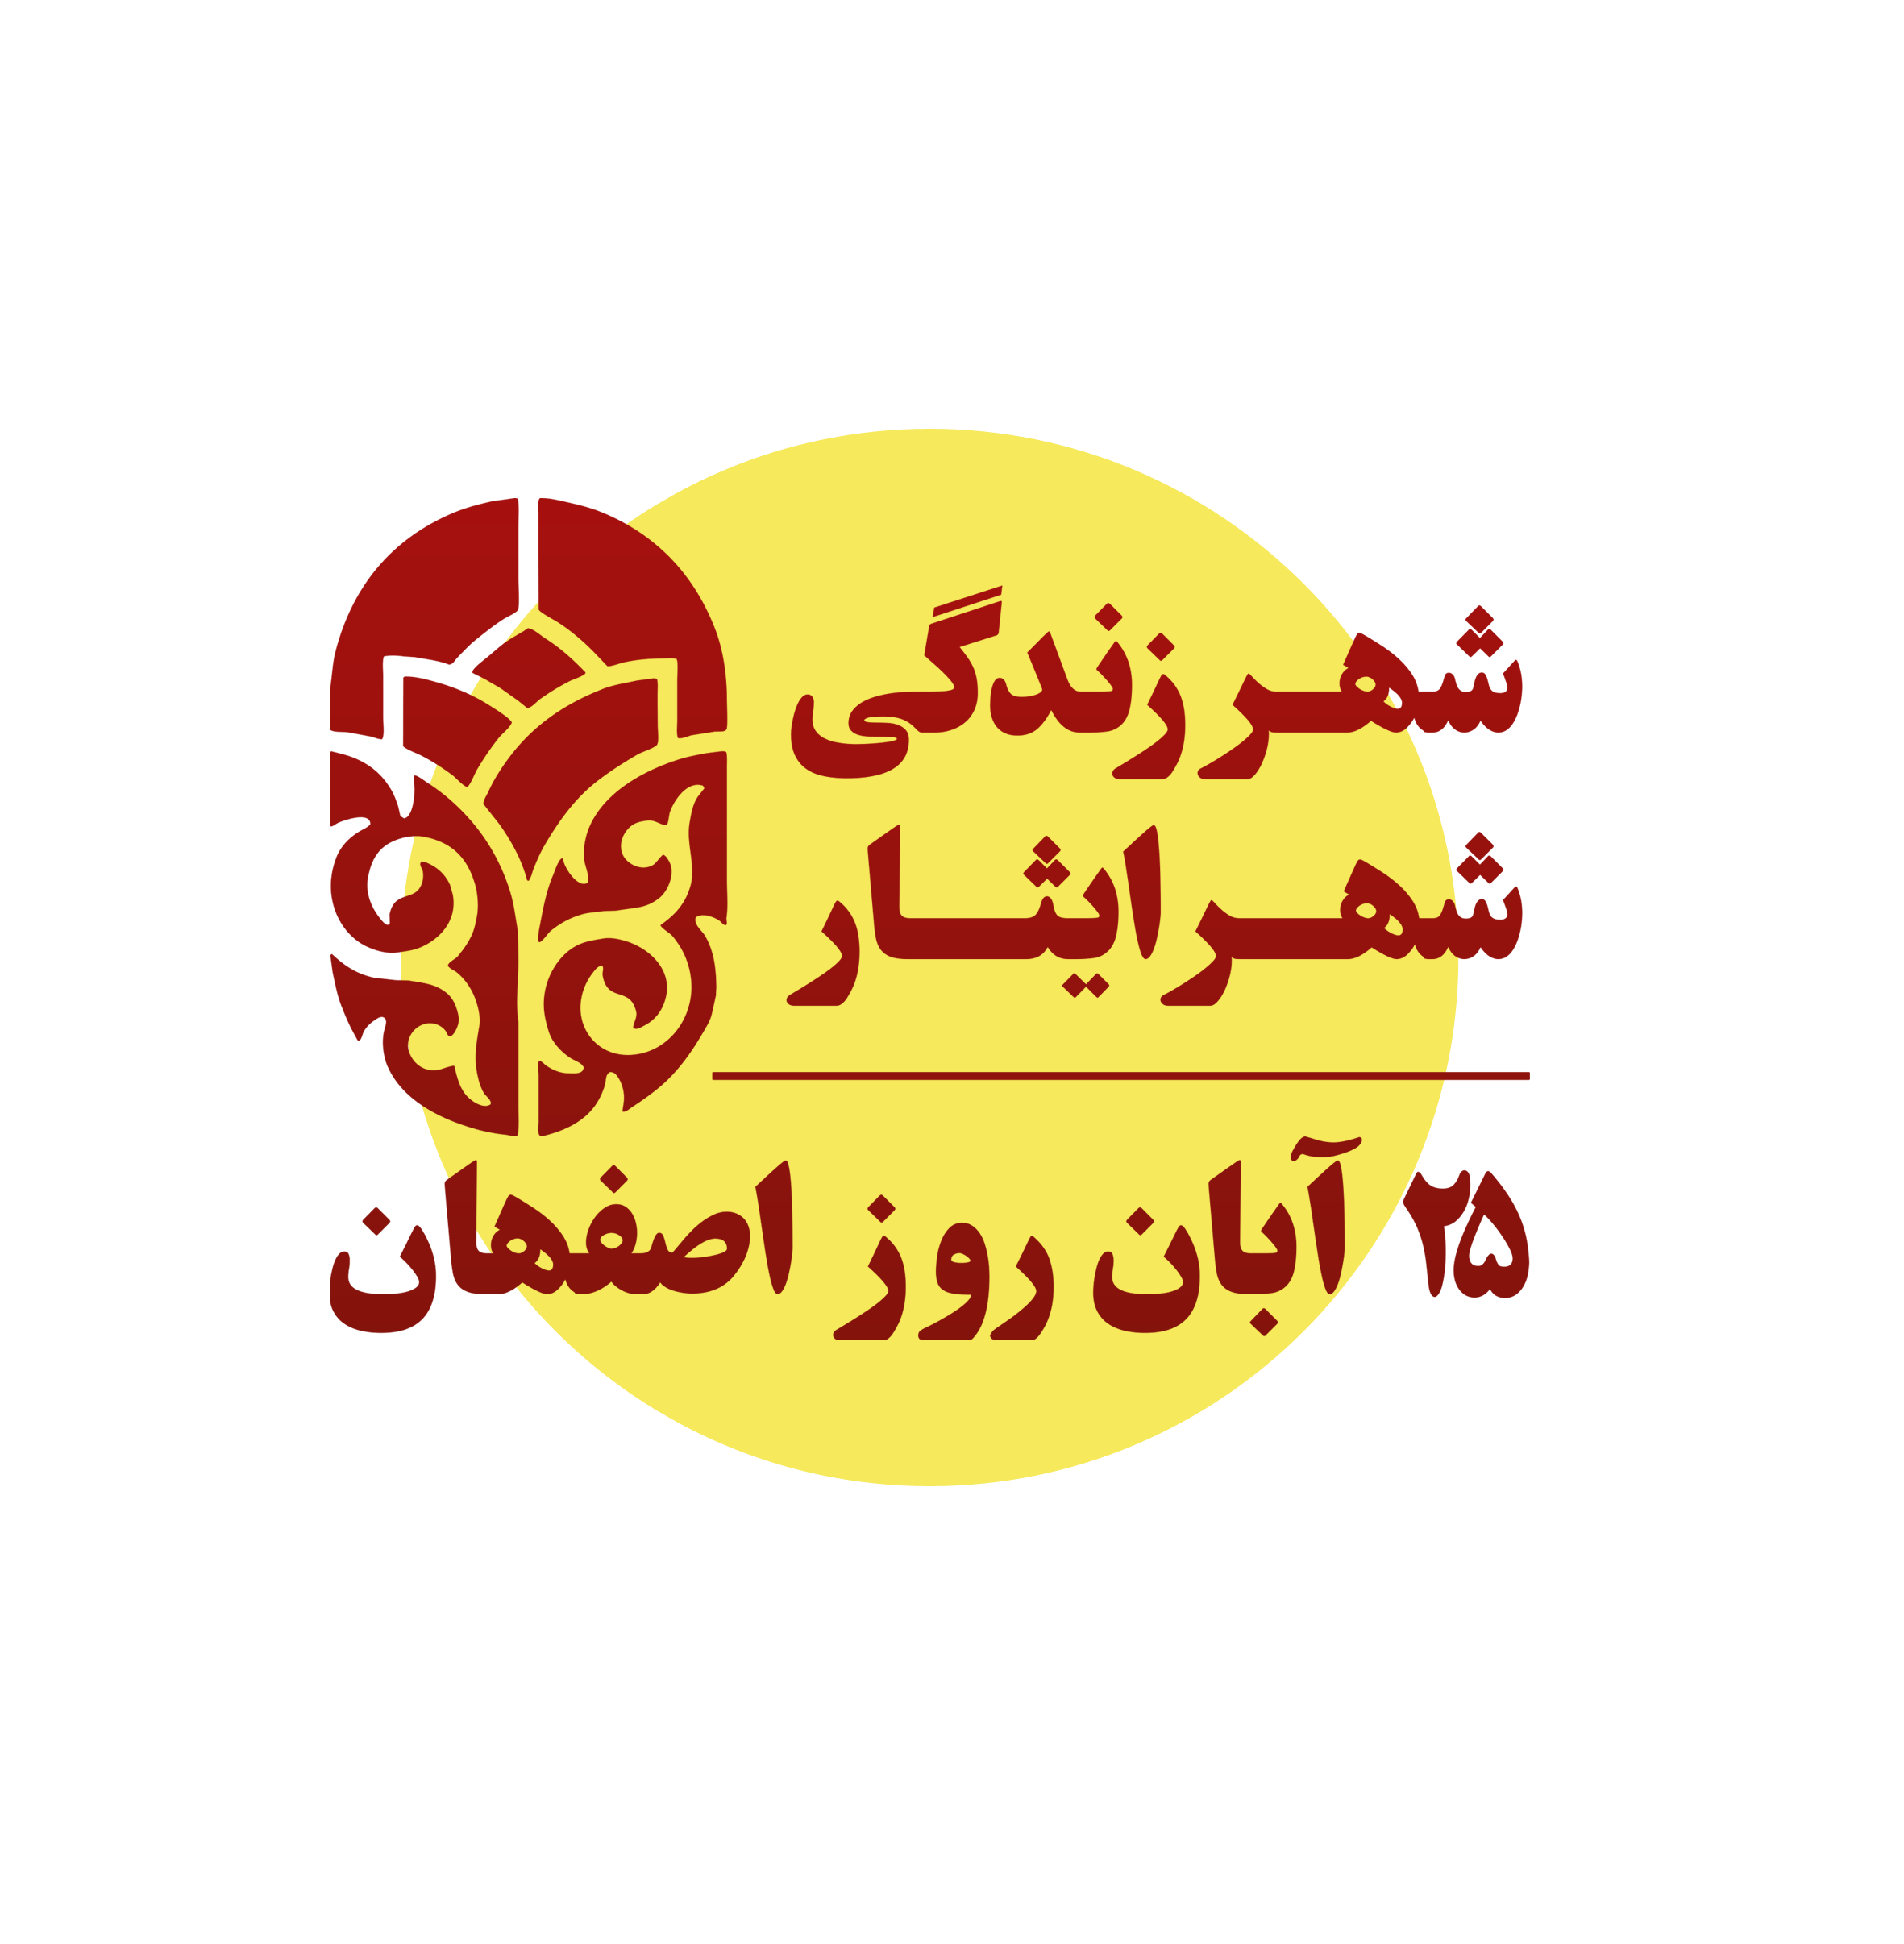 25 آبان روز اصفهان